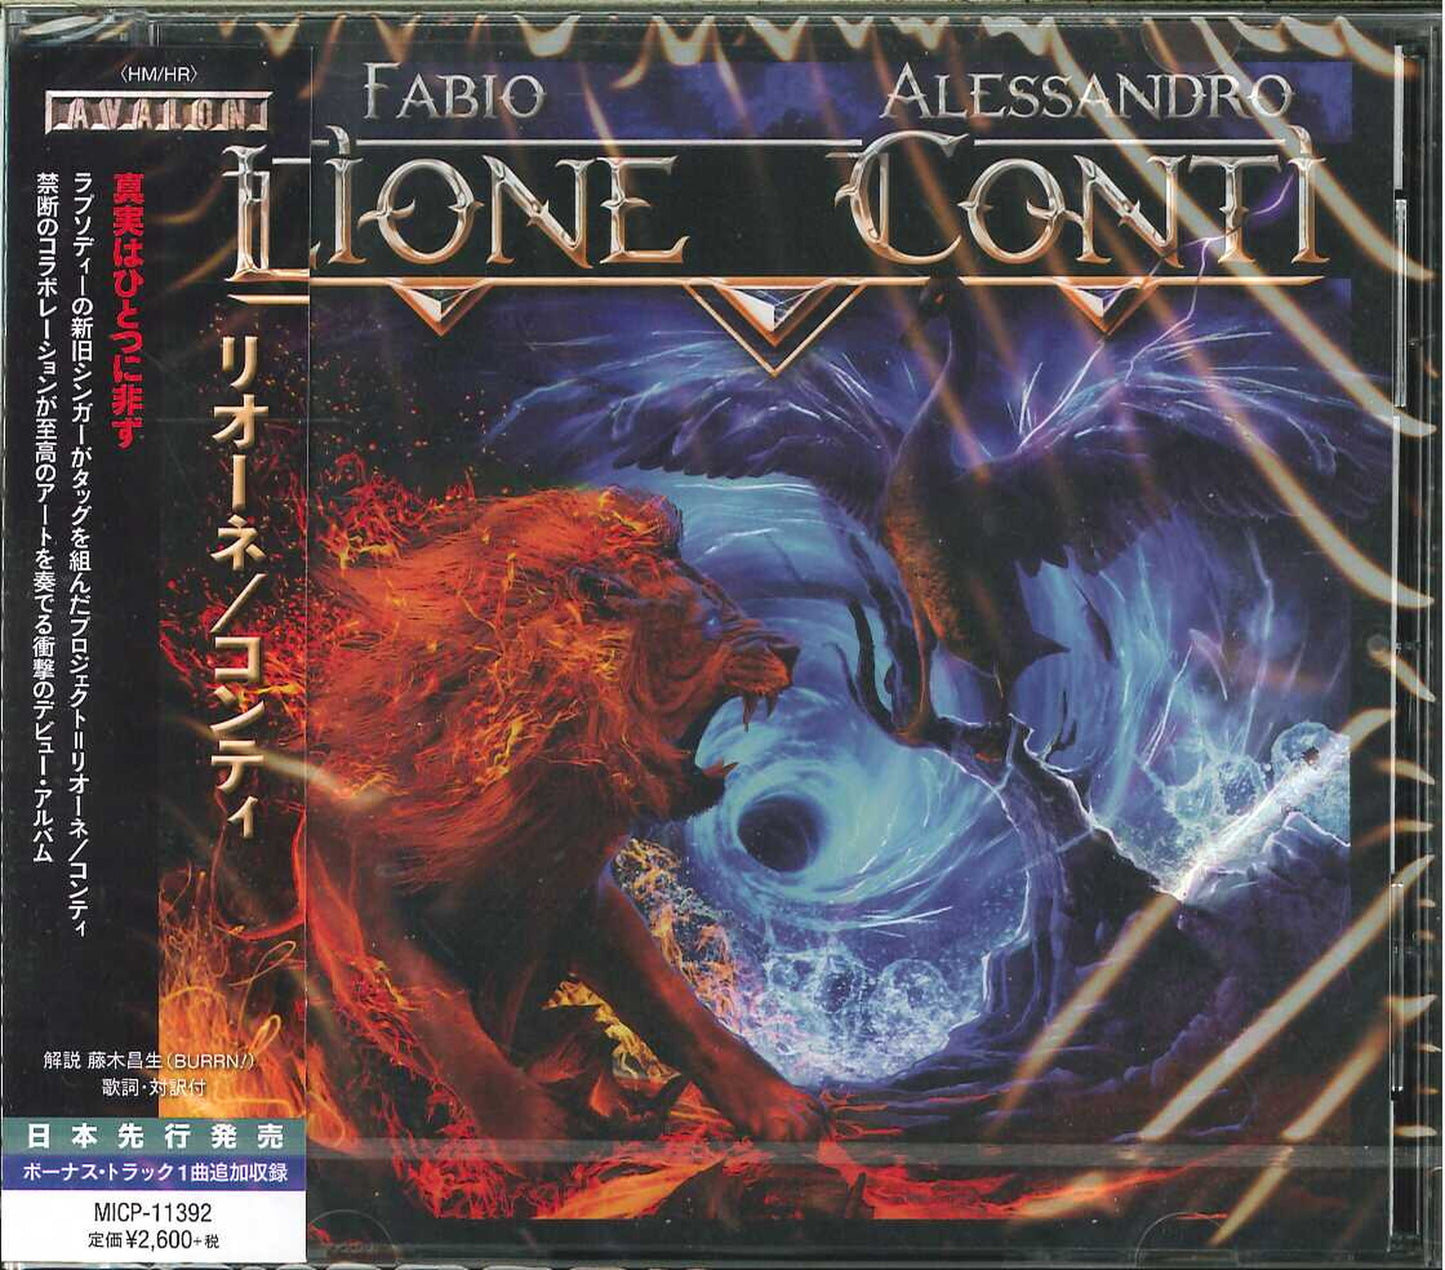 Lione / Conti - S/T - Japan CD